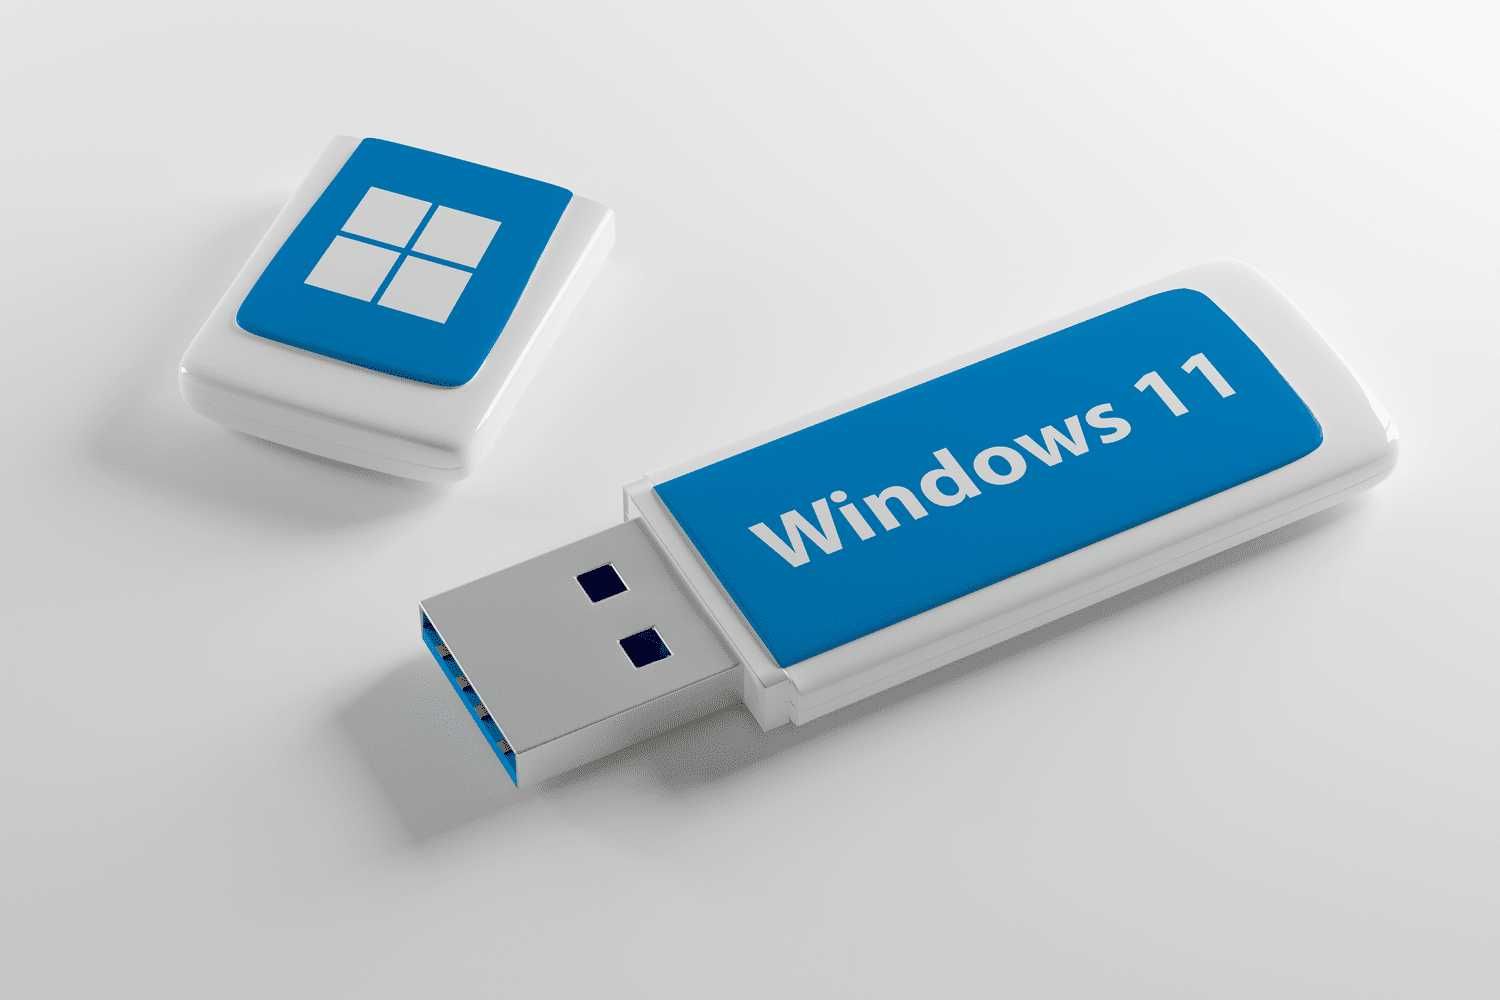 Stick NOU+Licenta Windows 10/Windows 11/Windows 7,Office key instalare